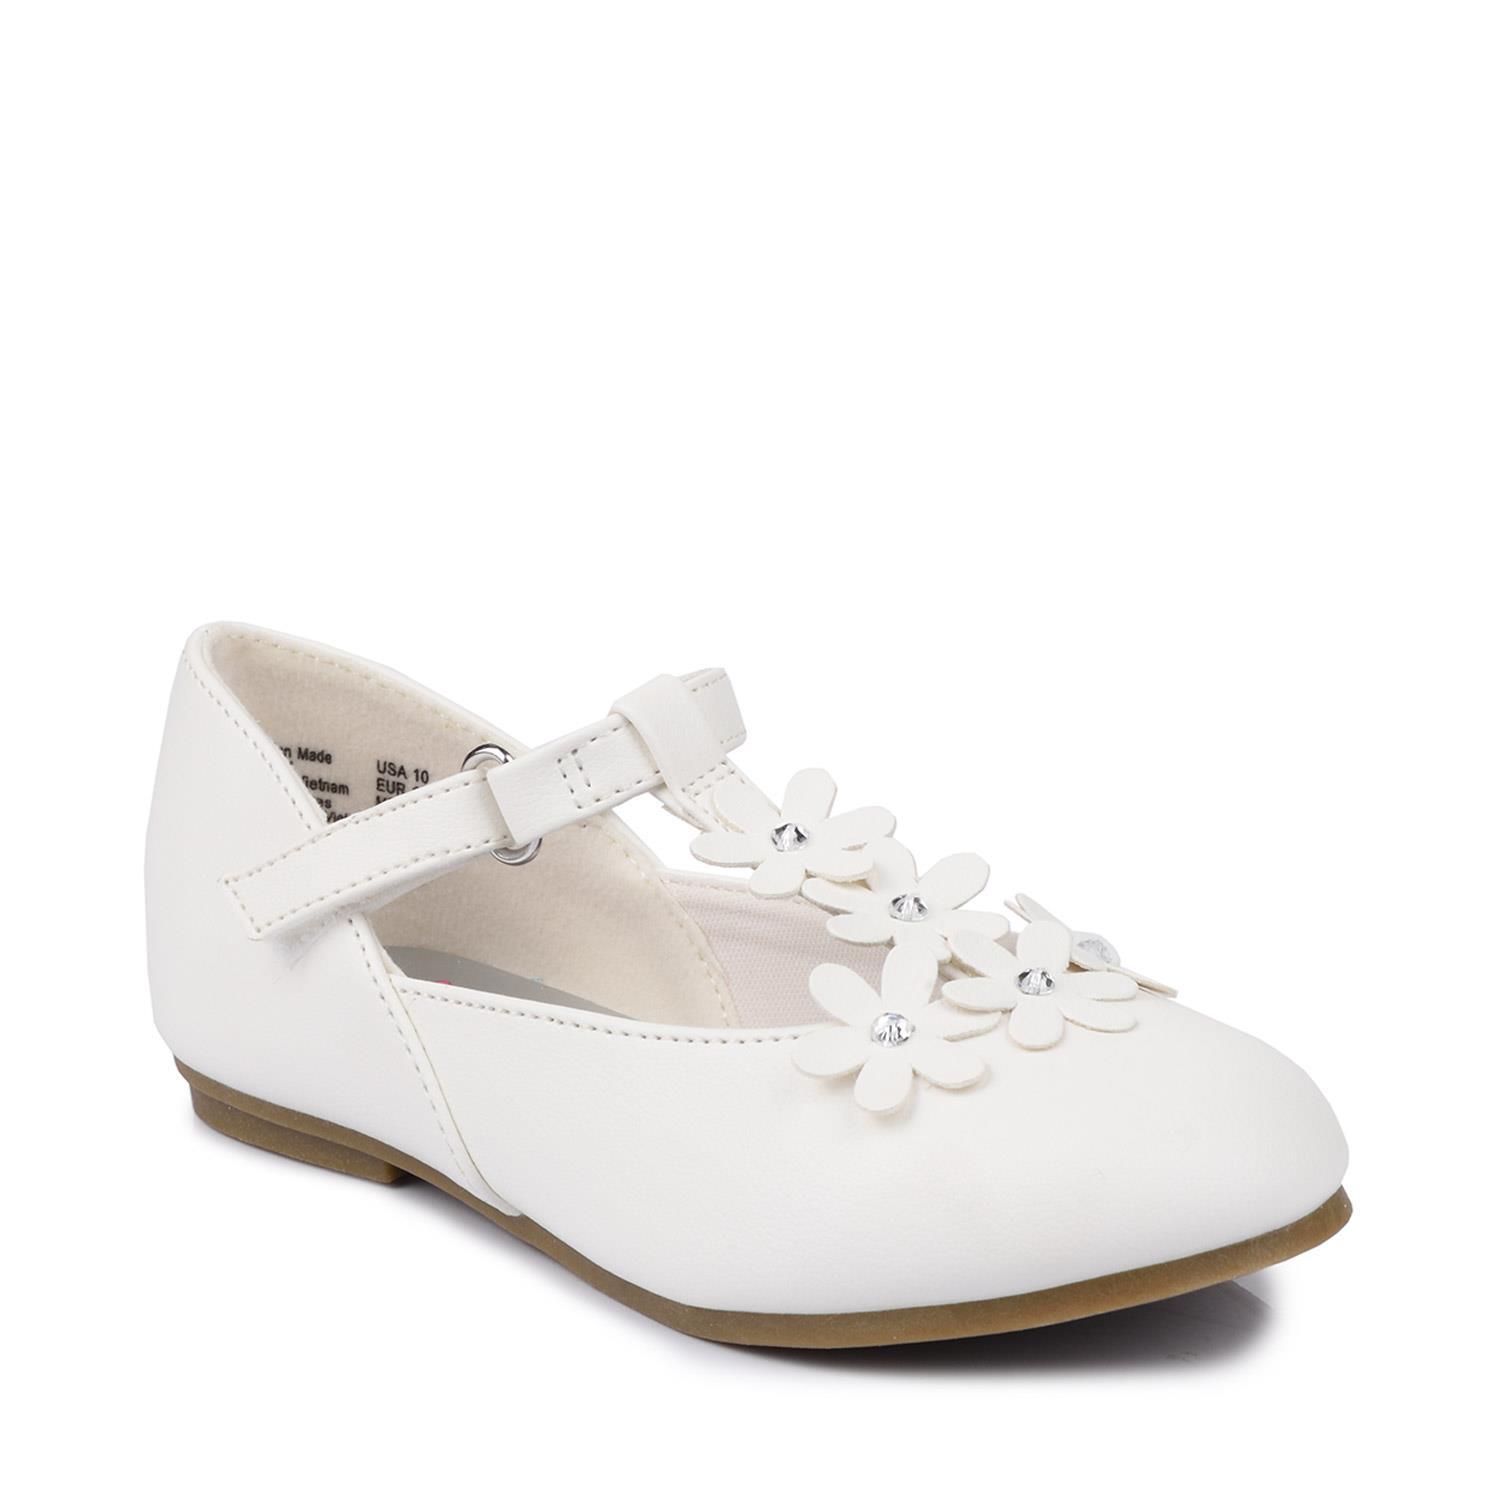 ROBO รองเท้าส้นแบนเด็กผู้หญิง Abby Flower Strap Flat รุ่น 176141 สีขาว ไซส์ US 6